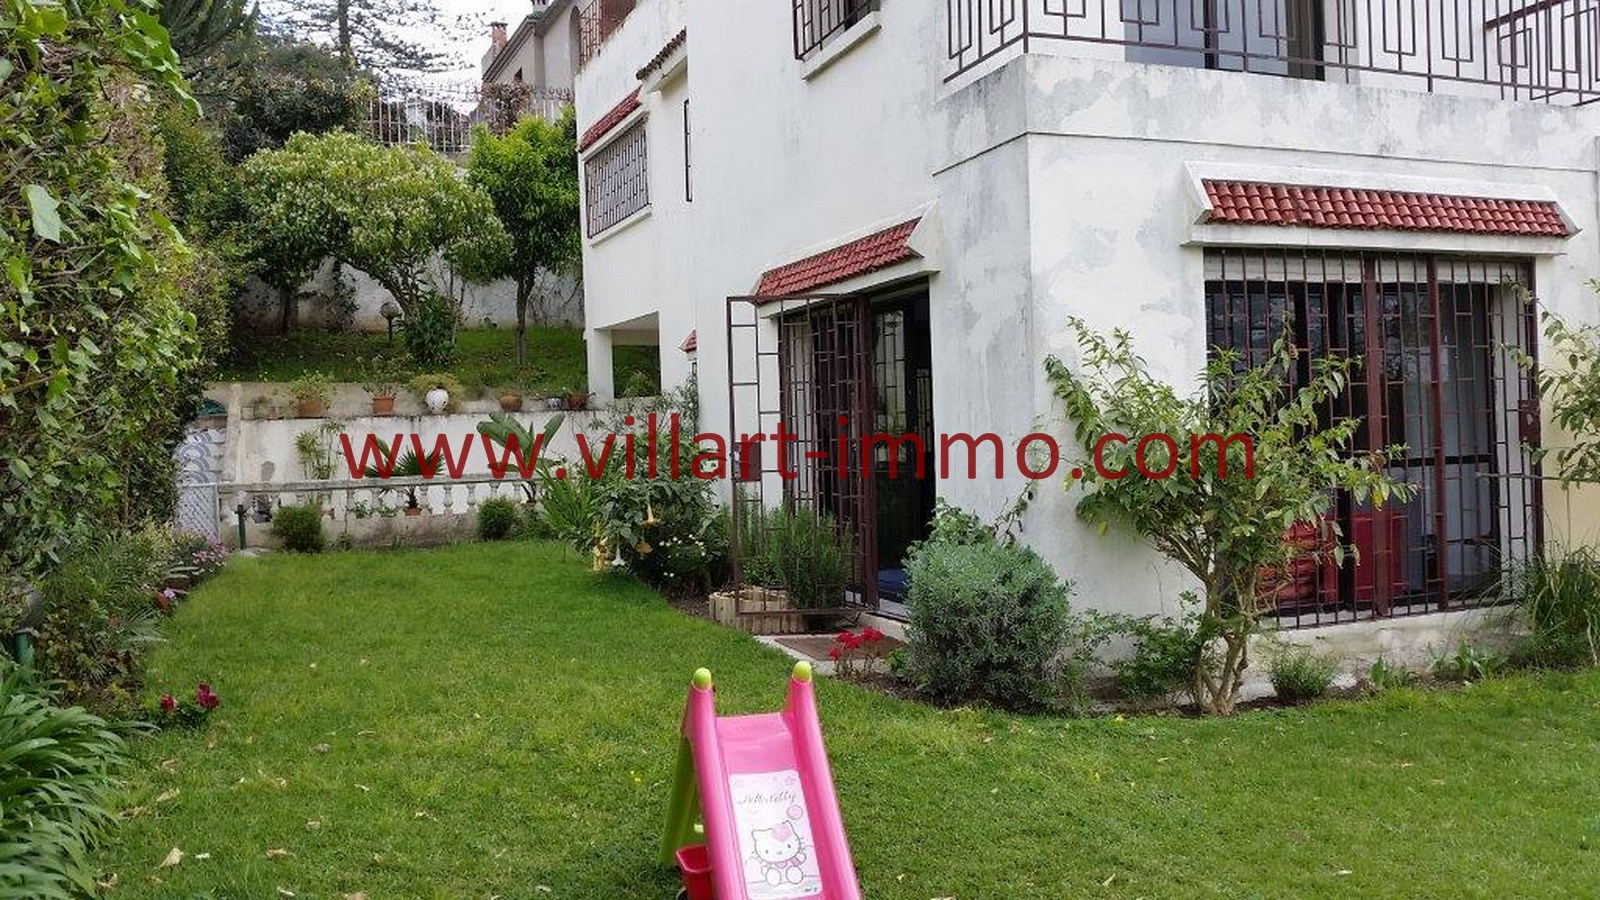 1-a-vendre-tanger-villa-californie-jardin-1-vv459-villart-immo-agence-immobiliere